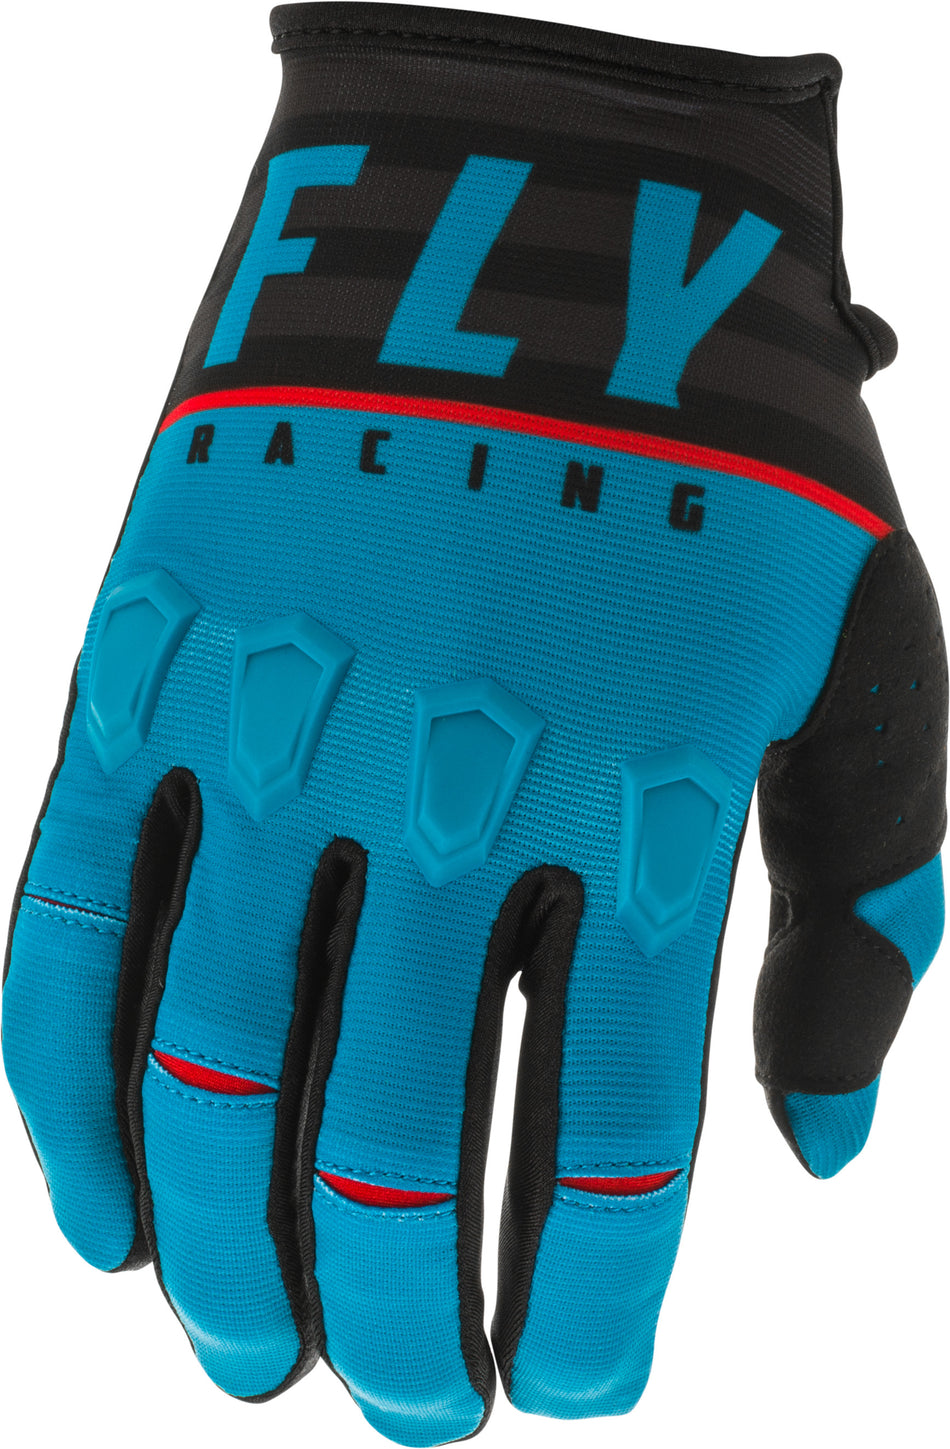 FLY RACING Kinetic K120 Gloves Blue/Black/Red Sz 12 373-41912